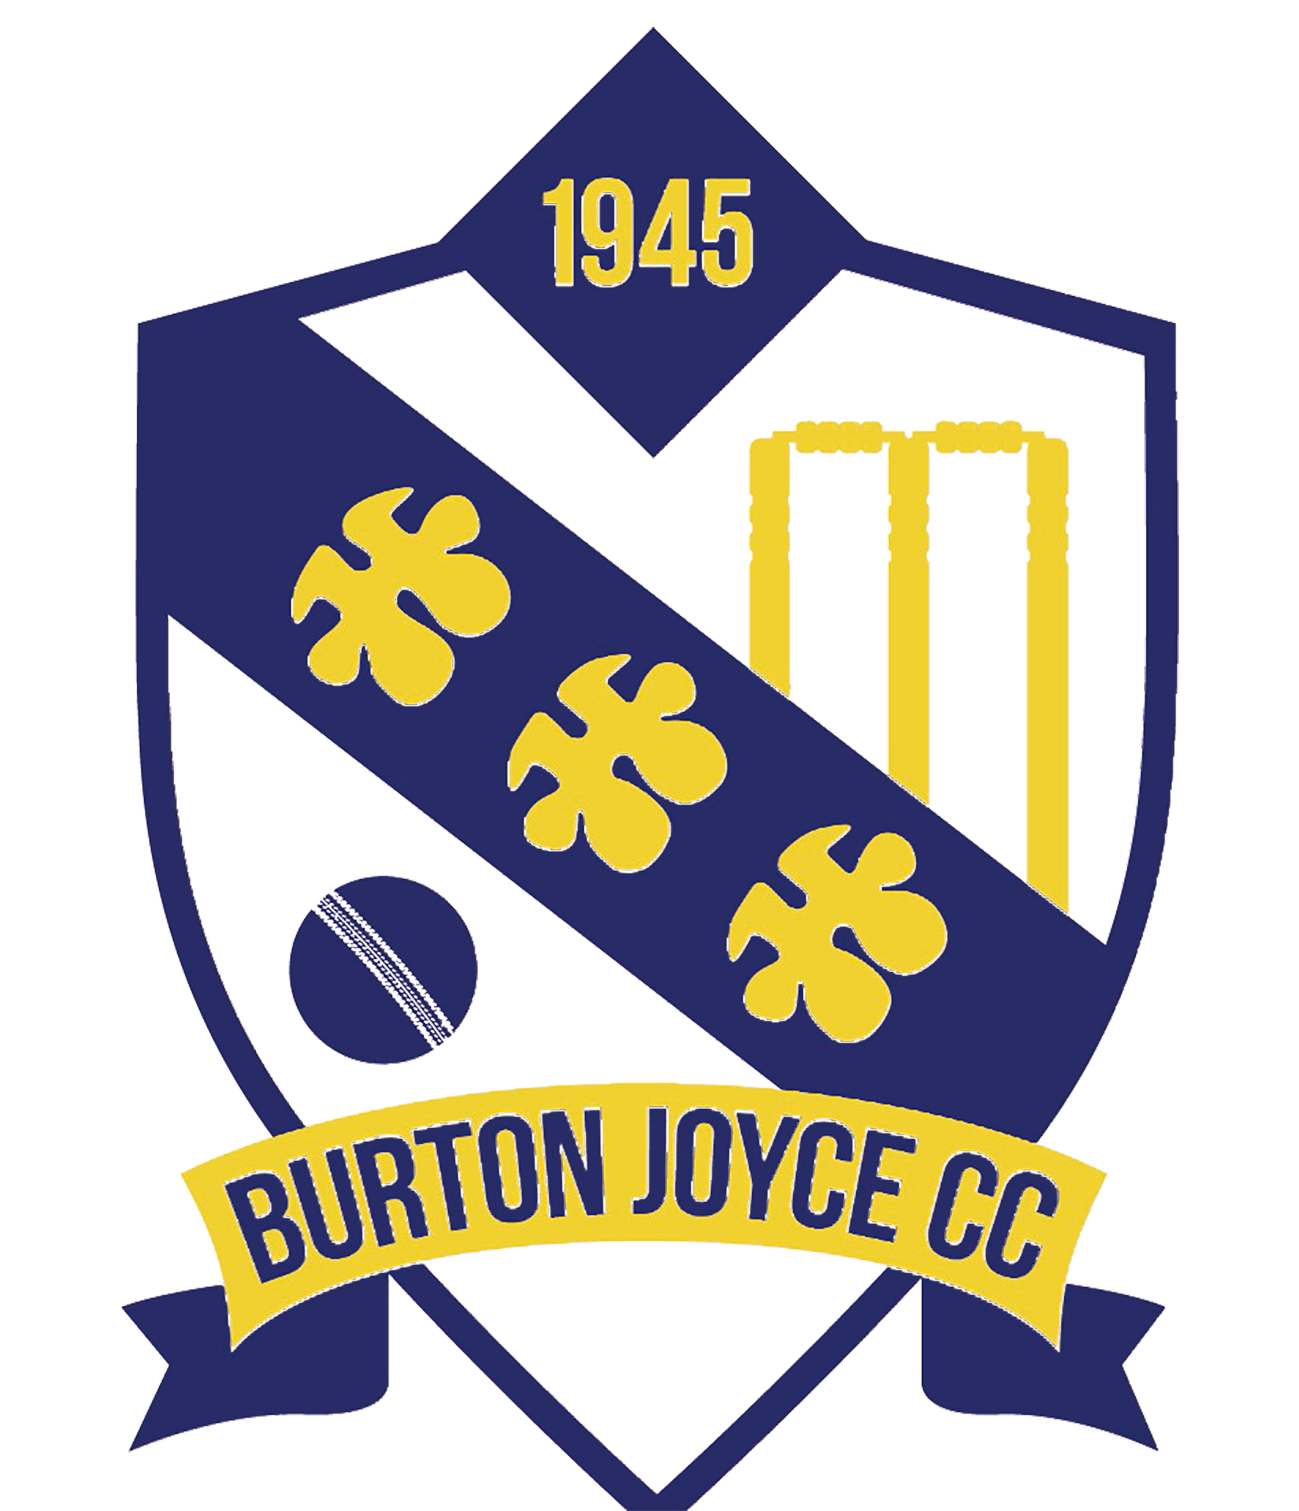 Burton Joyce CC